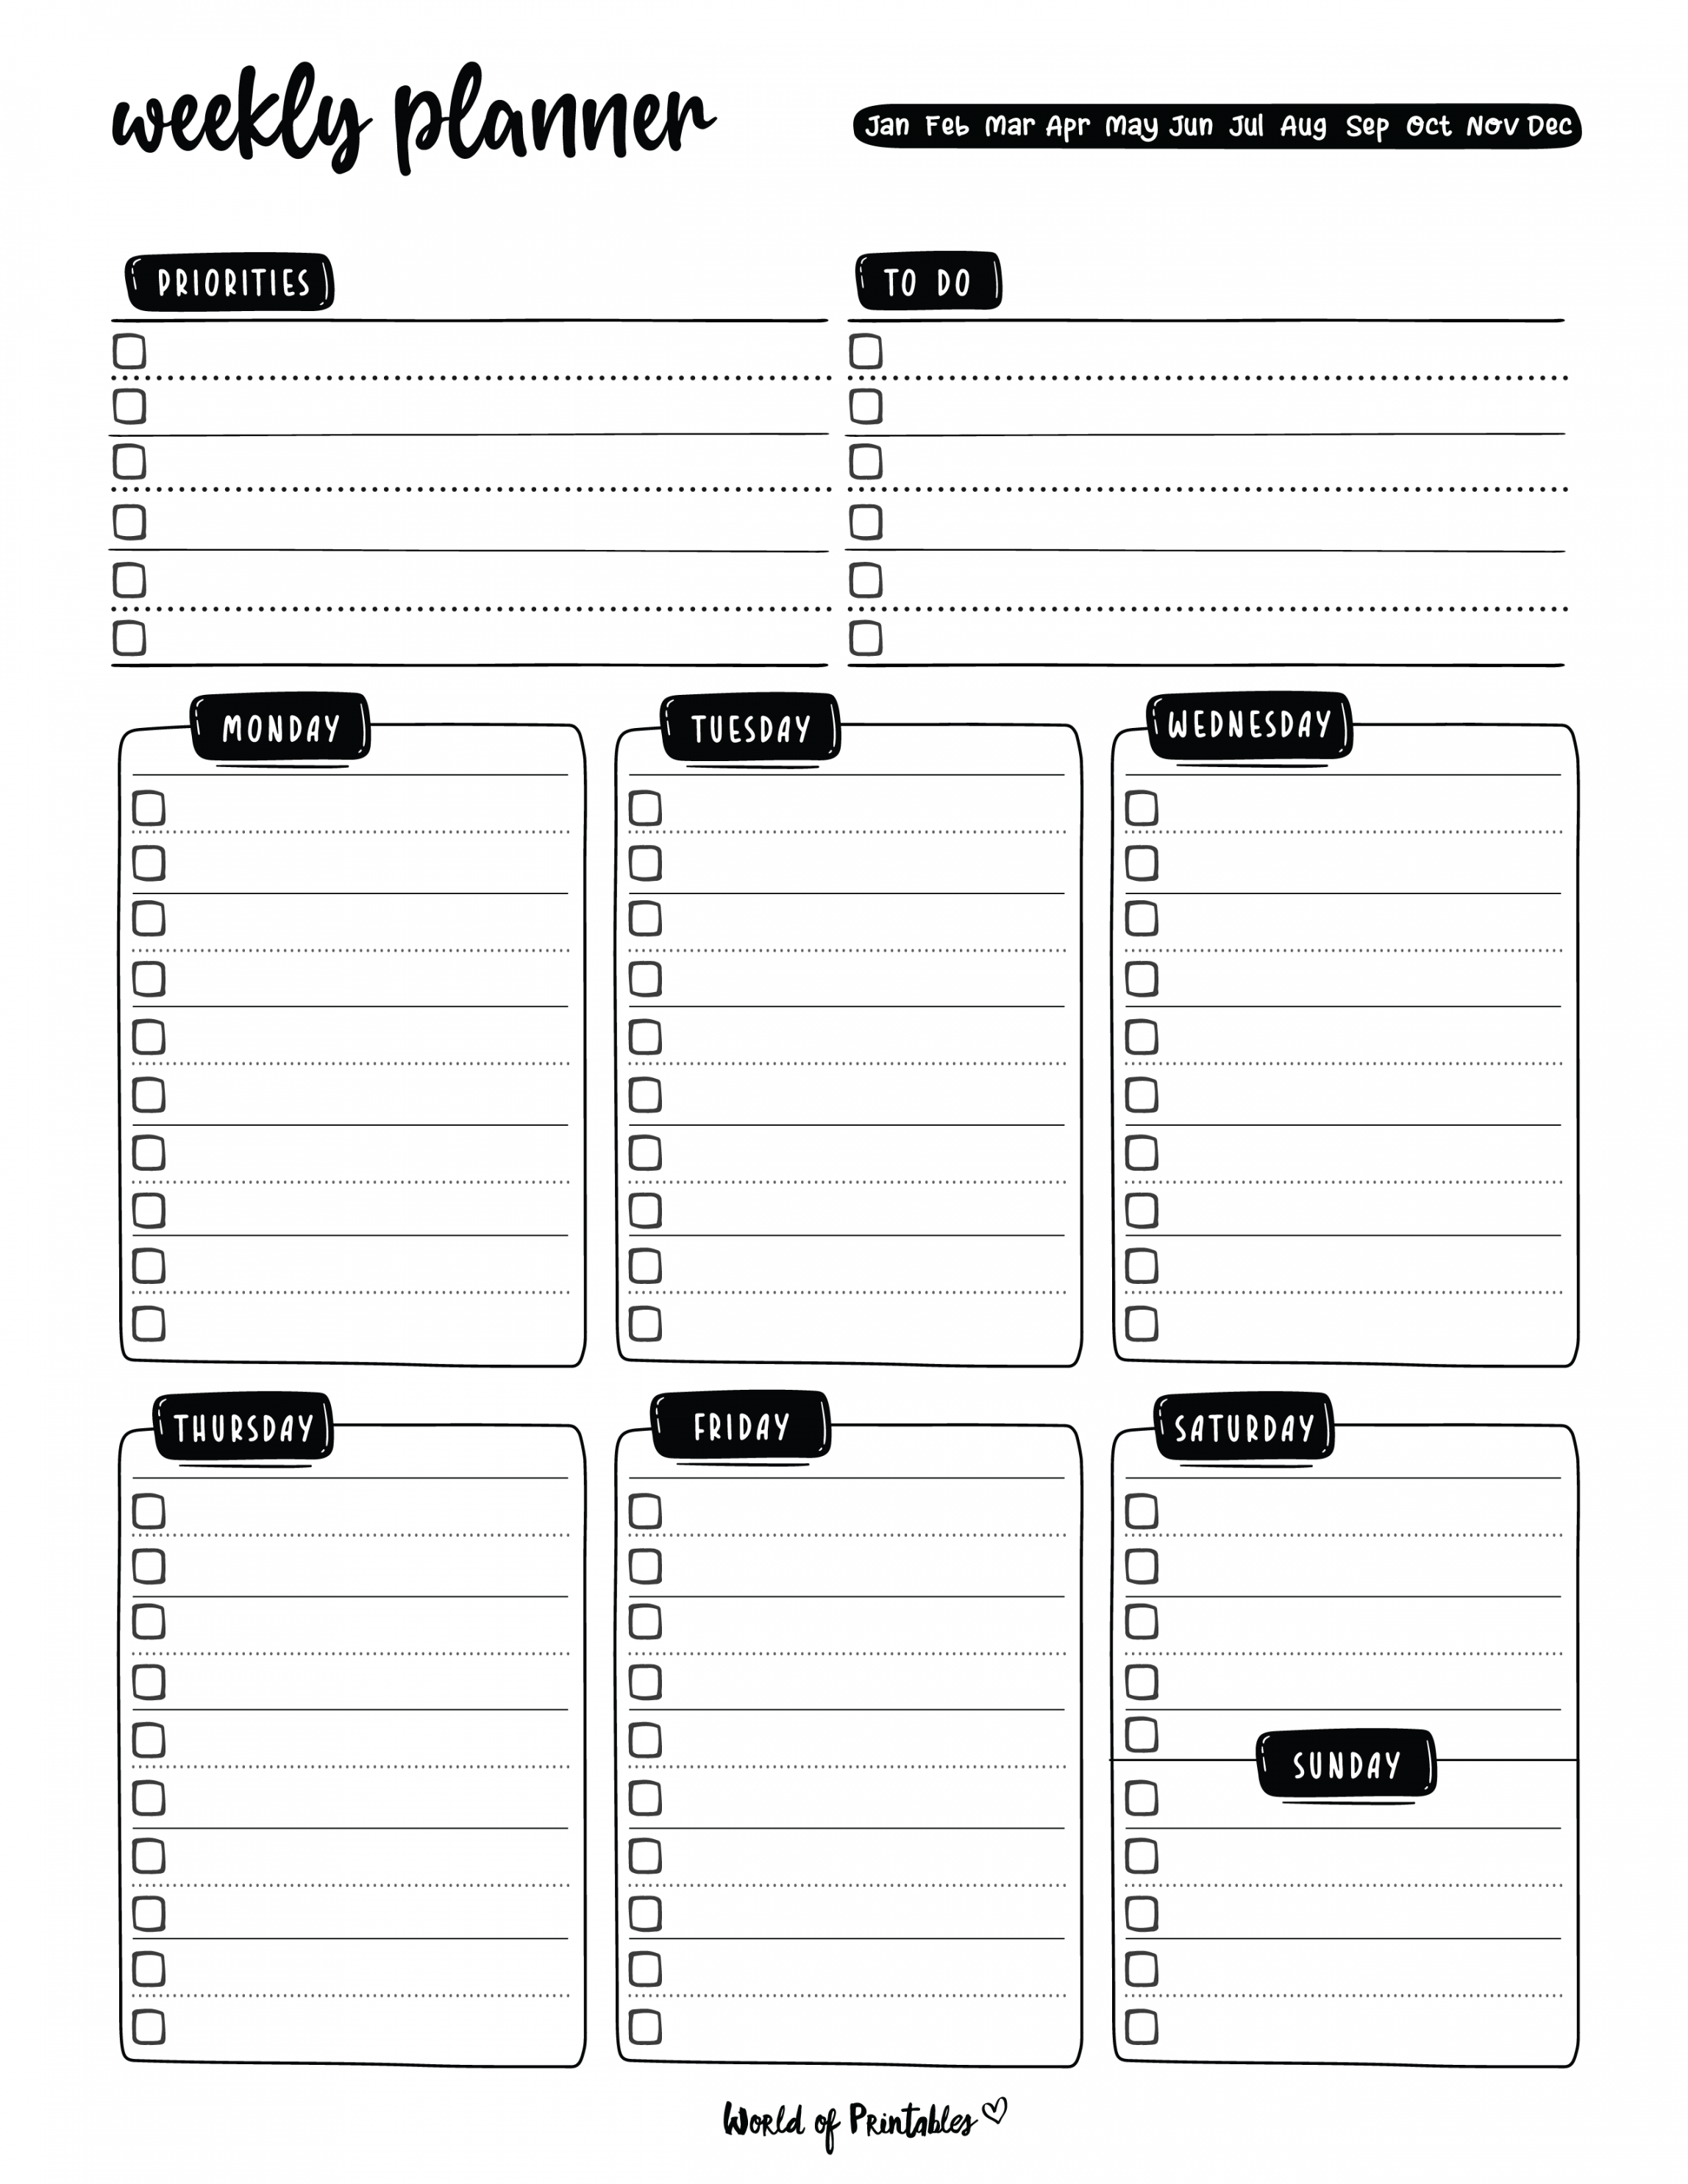 Weekly Planner Printable Free - Printable - Weekly Planner Templates - World of Printables